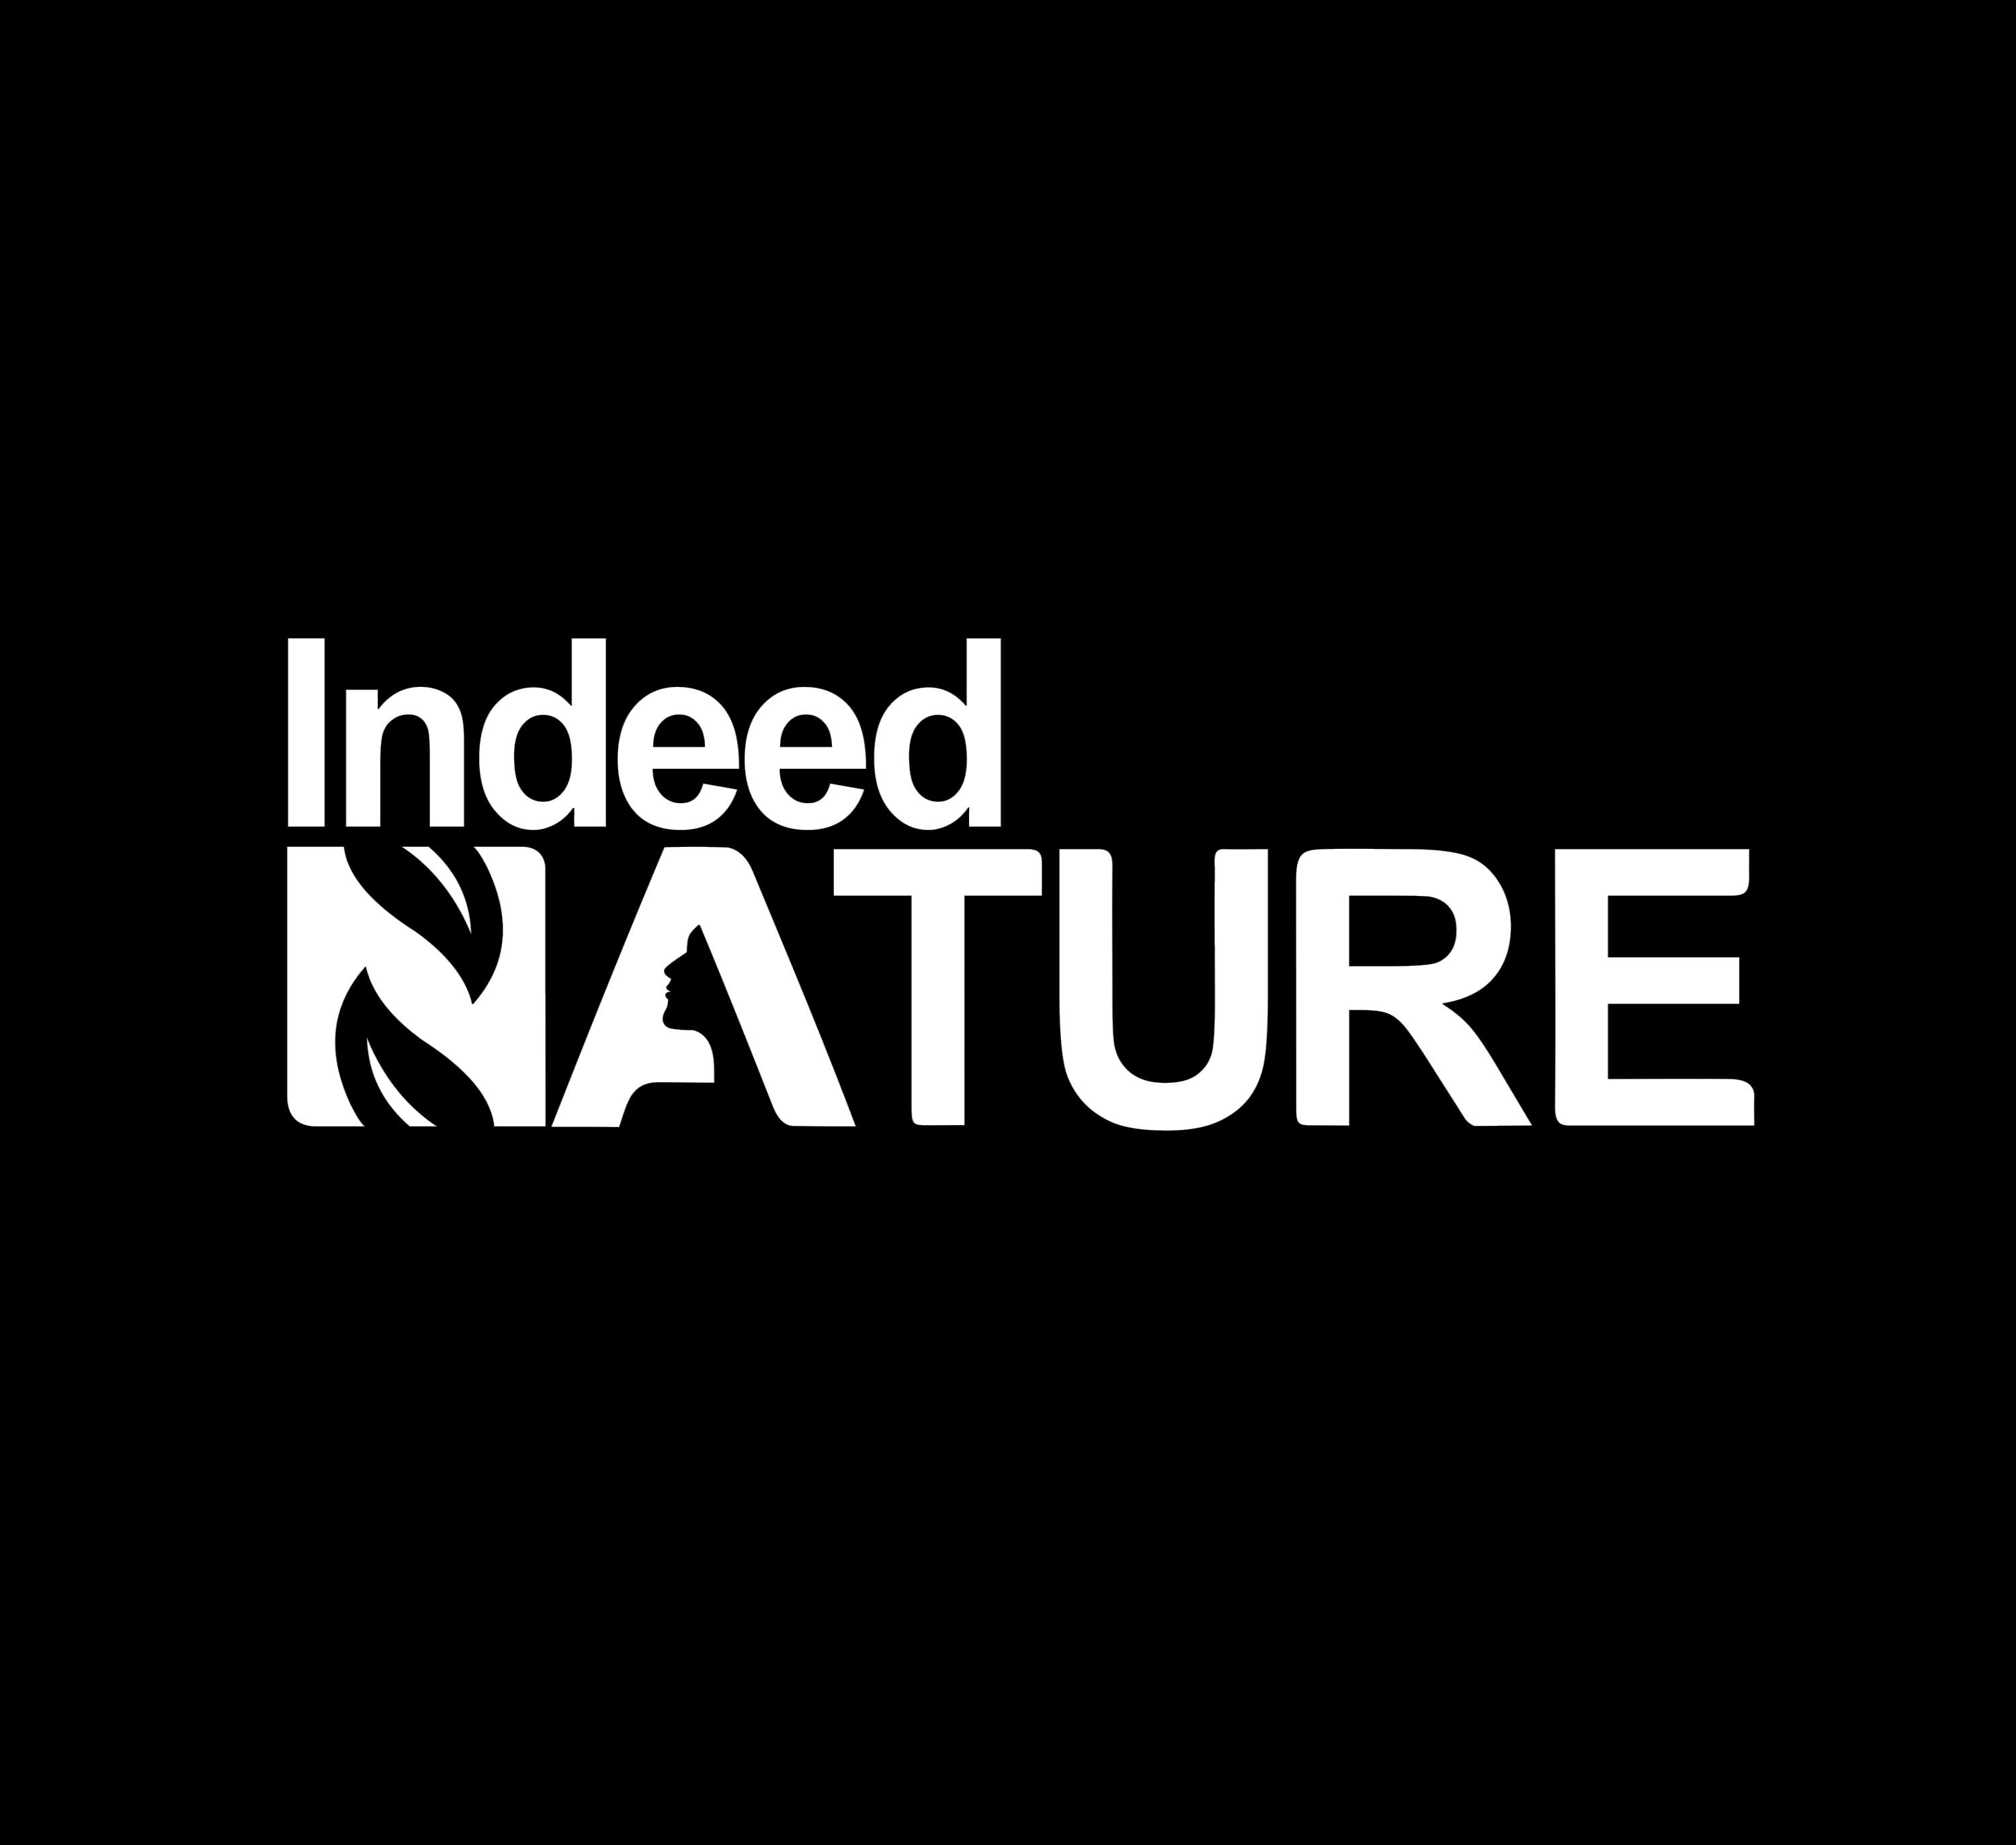 Indeed nature enterprises Logo